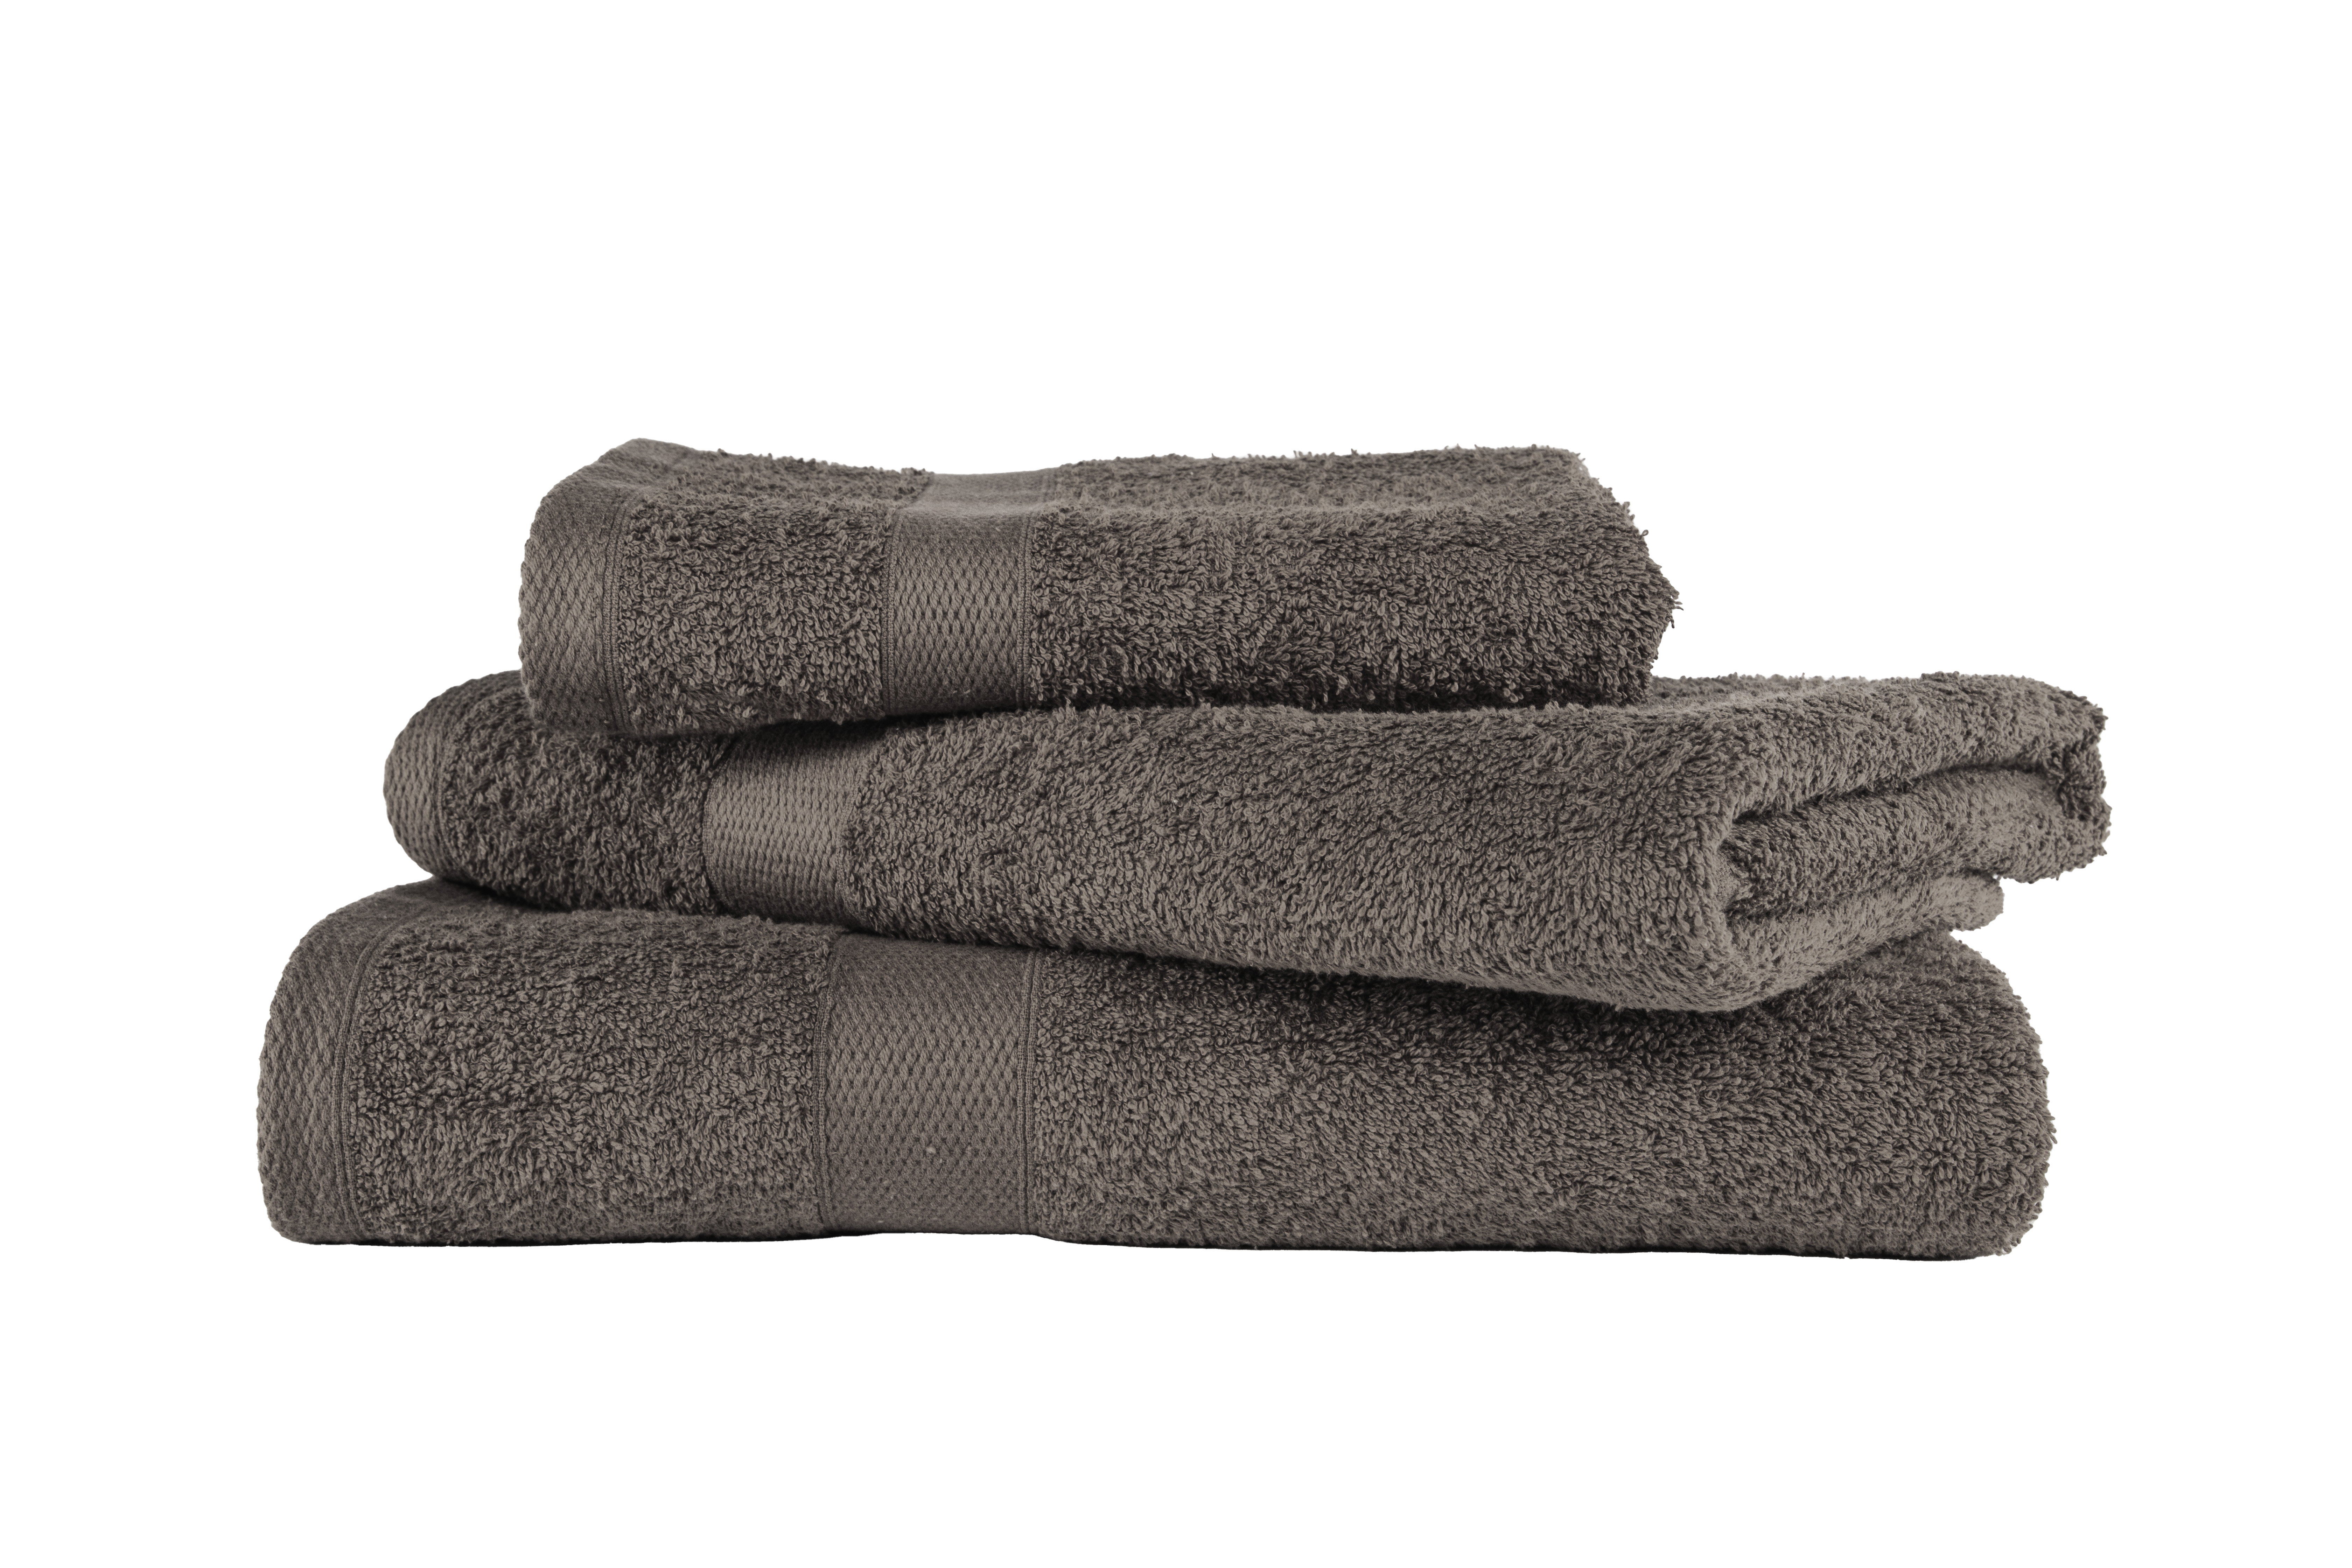 Bath towel 50x100cm, antracit grey